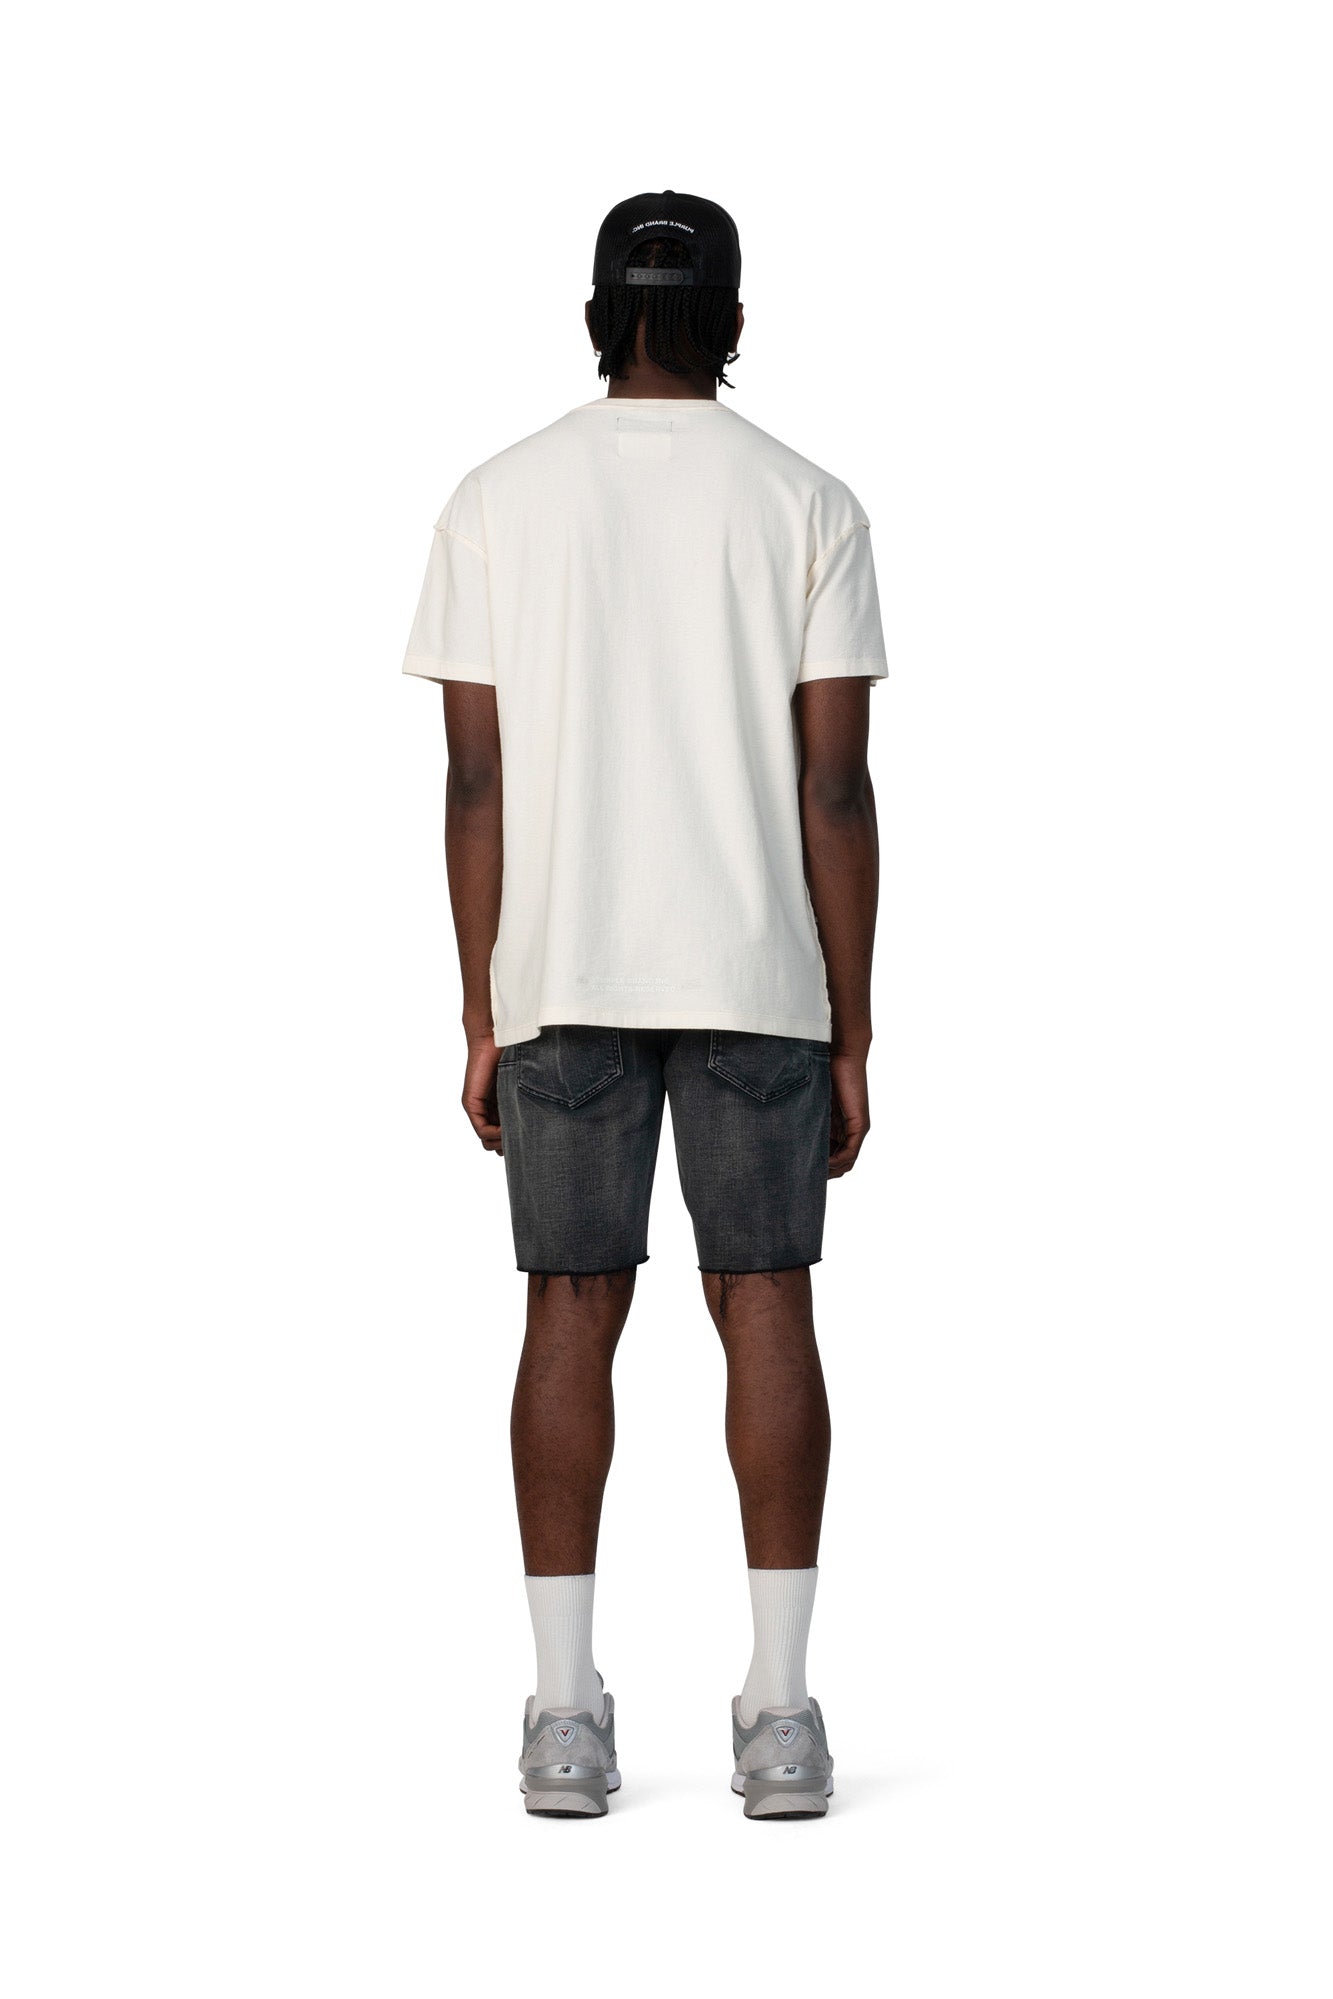 PURPLE BRAND - Men's Denim Jean Short - Mid Rise Short - Style No. P020 - Bandana Patch Work Black - Model Back Pose